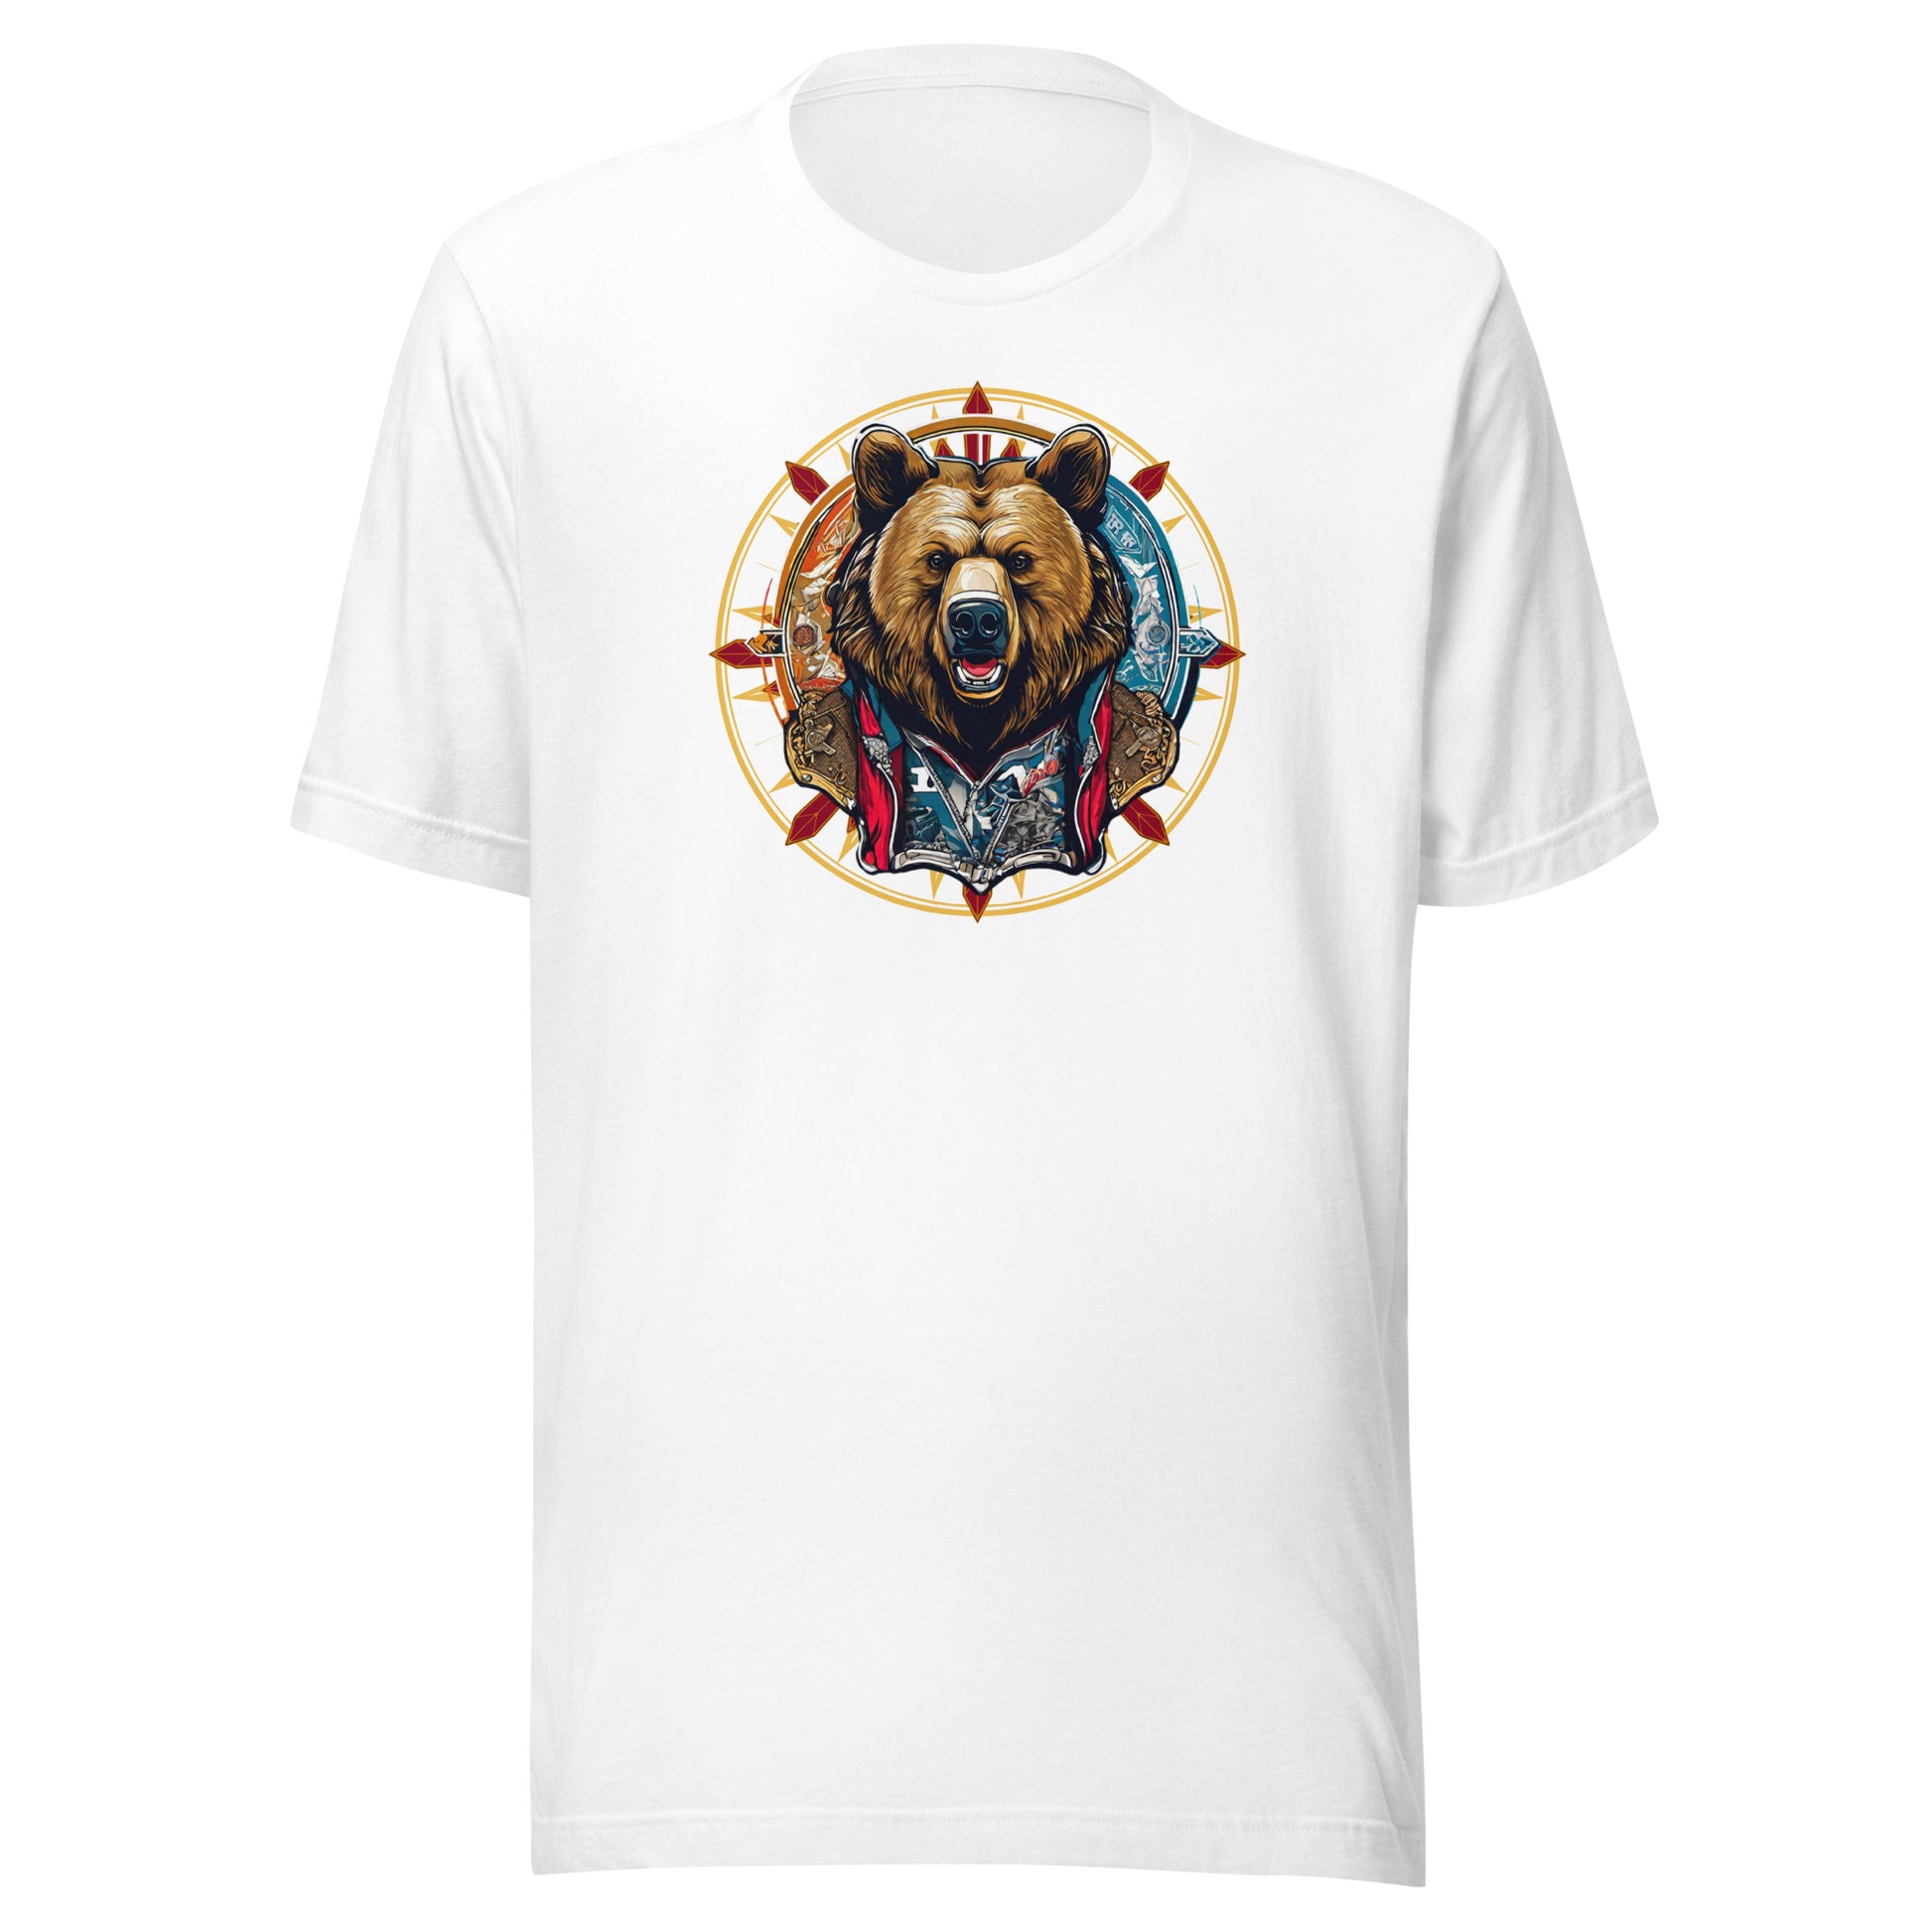 Bear Emblem Men's Graphic T-Shirt White